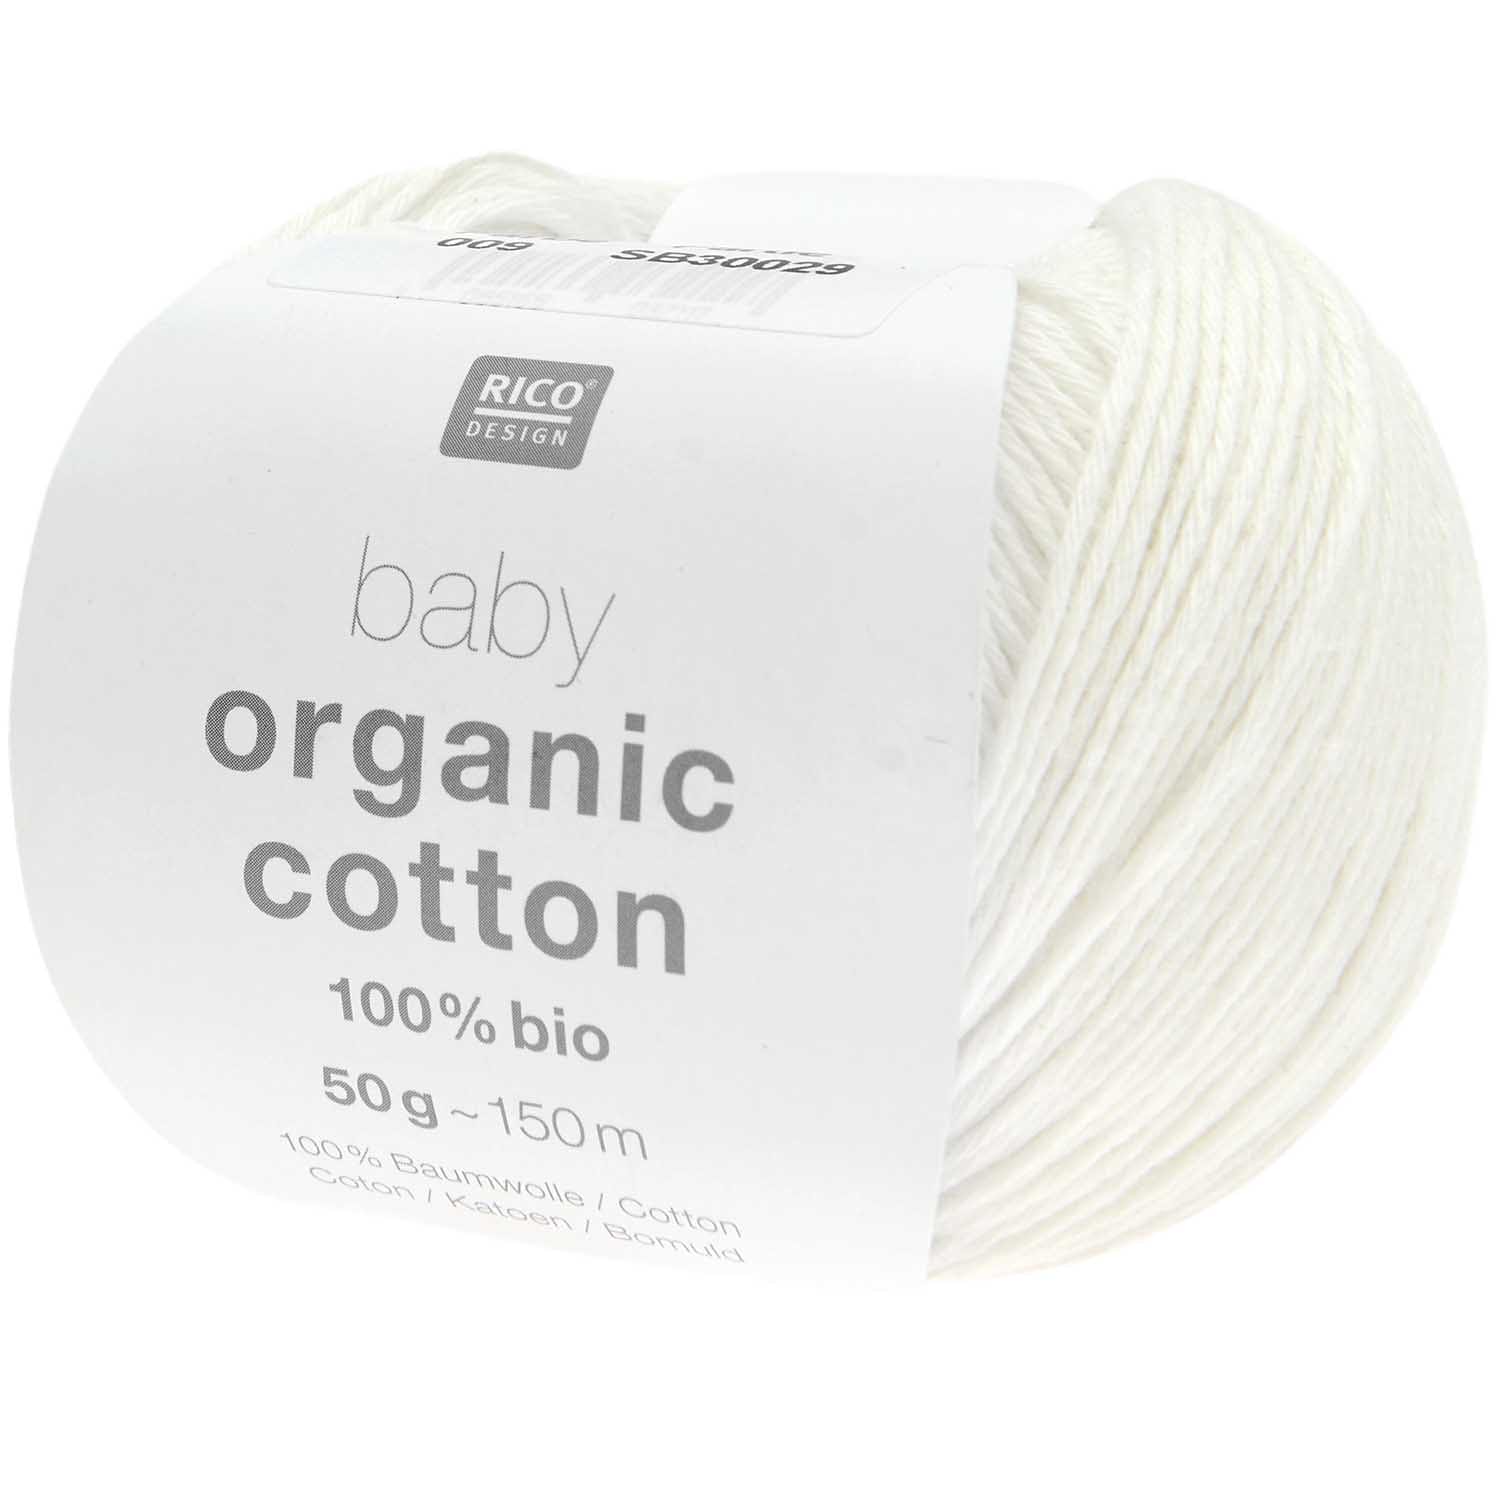 Rico Baby Organic Cotton 50g